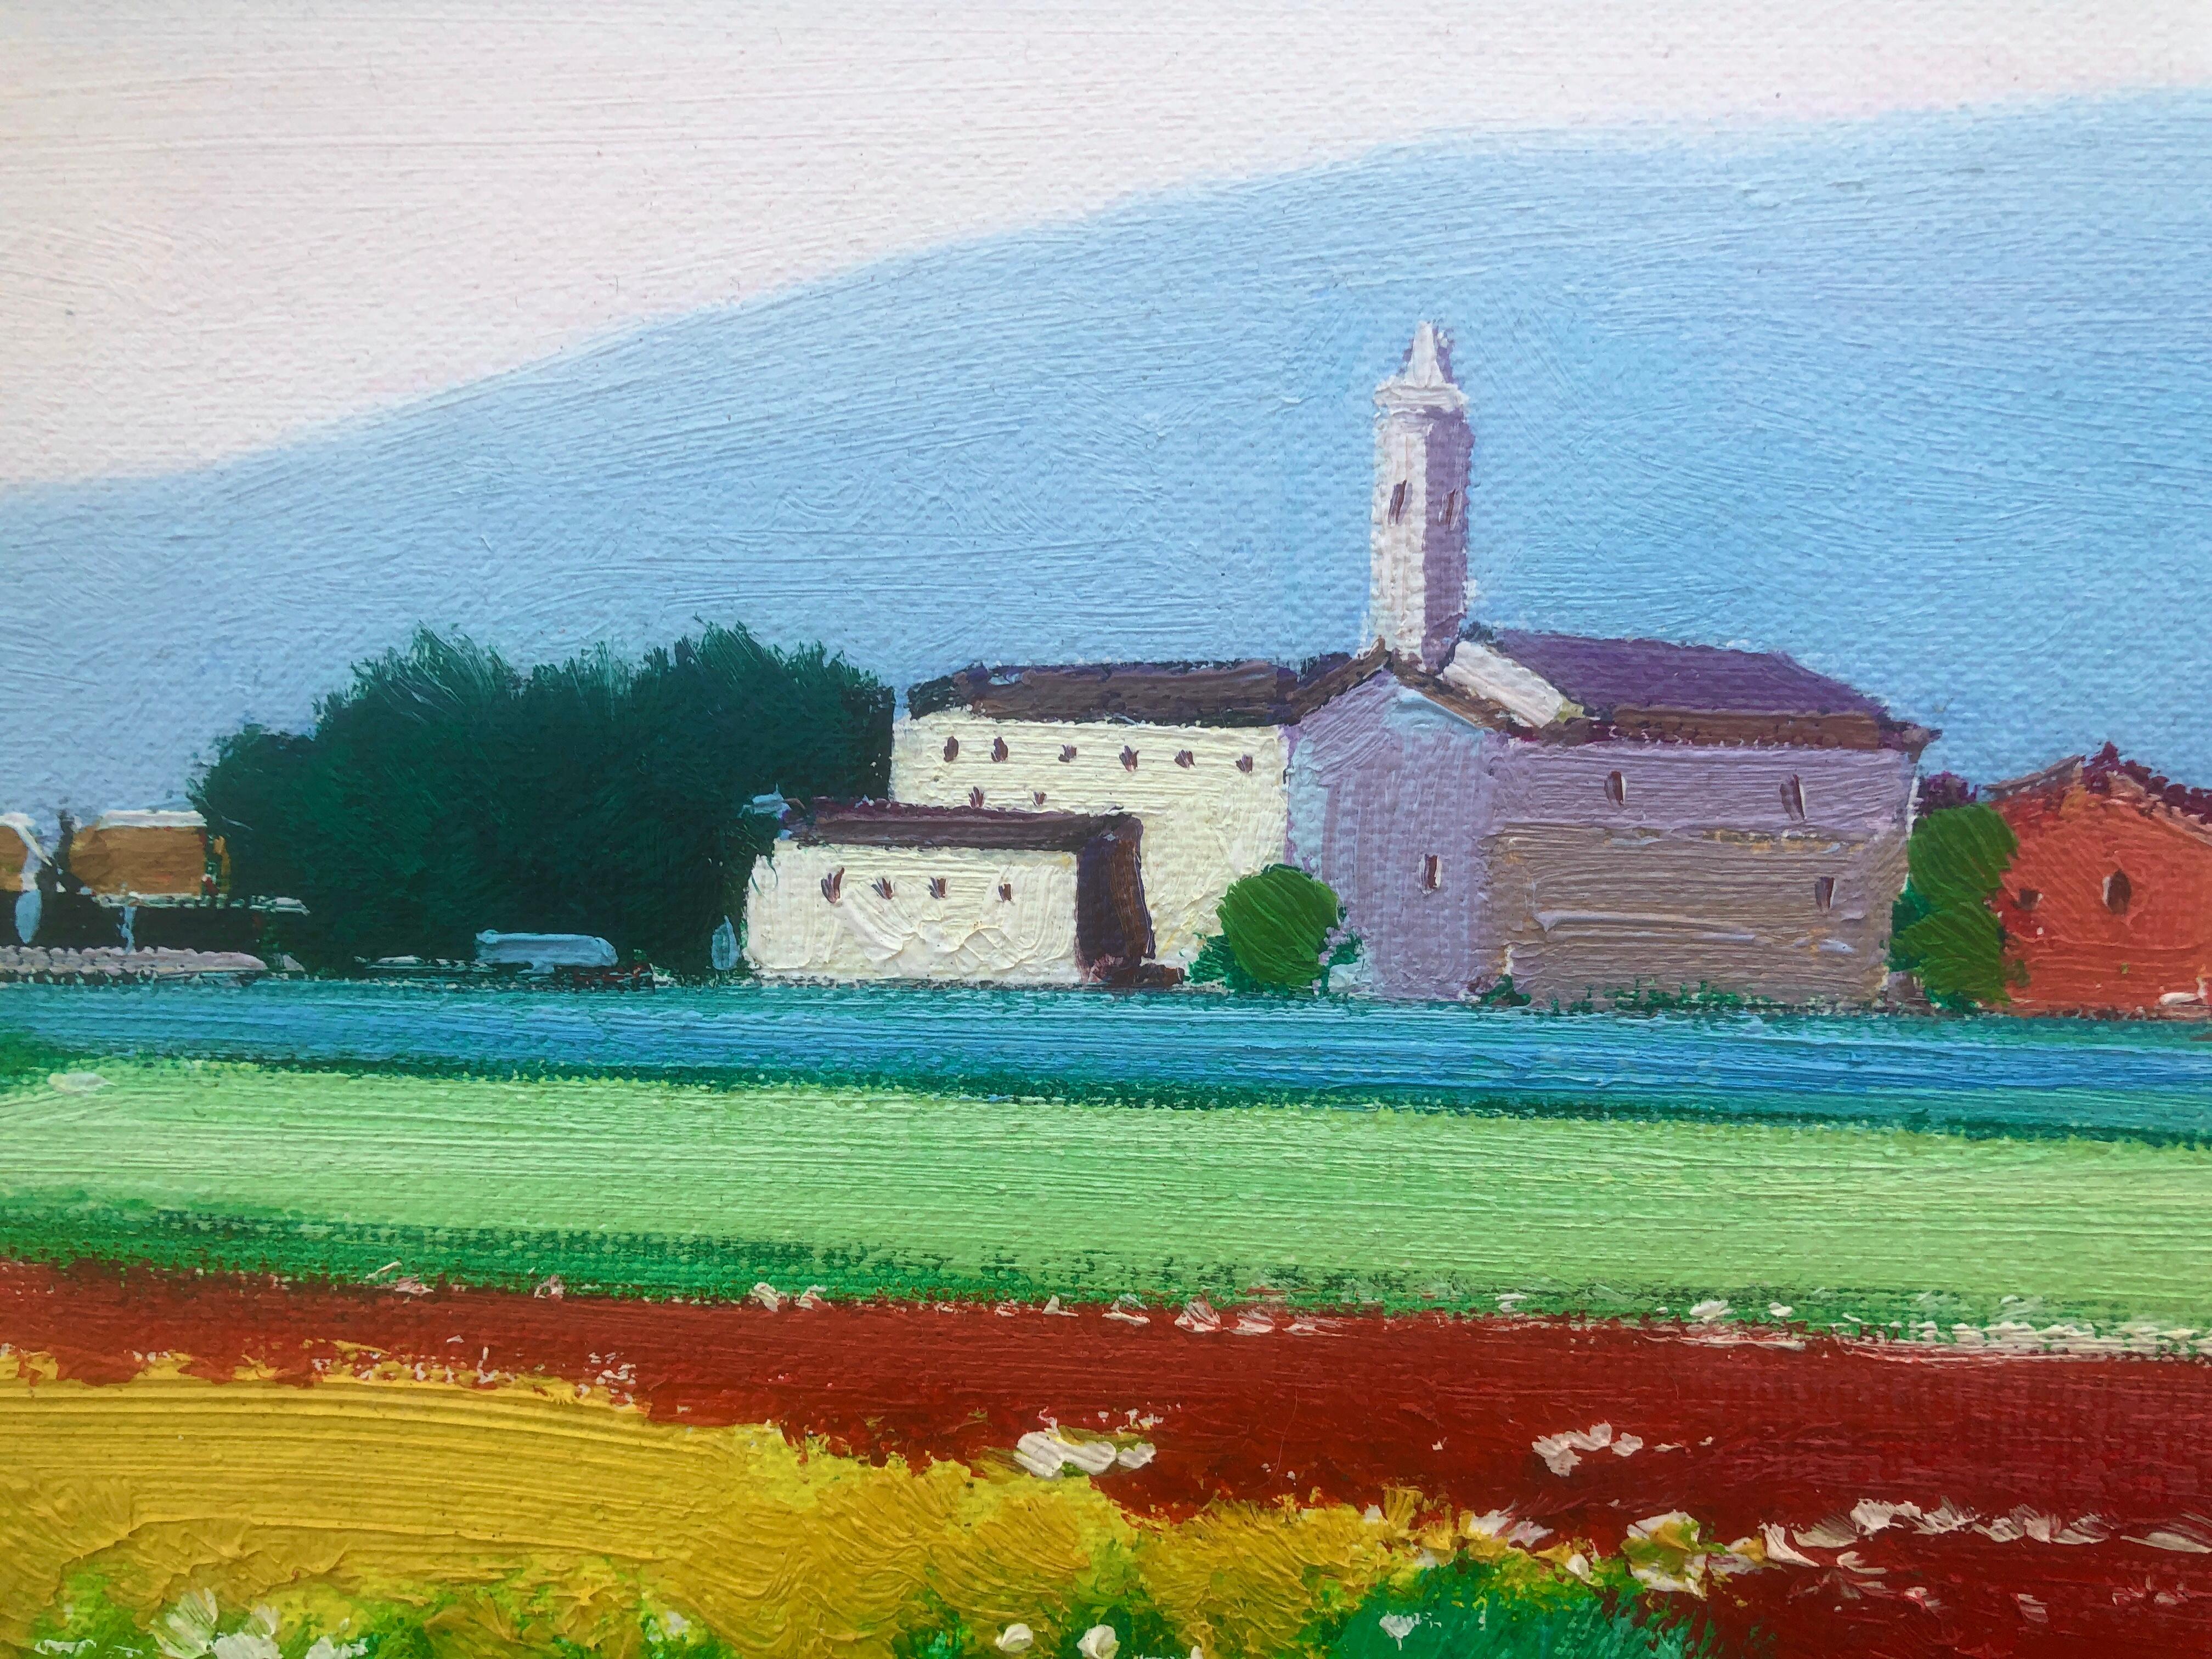 Agusti Gil - Flowery landscape - Oil on canvas
Oil mesures 33x41 cm.
Frameless.